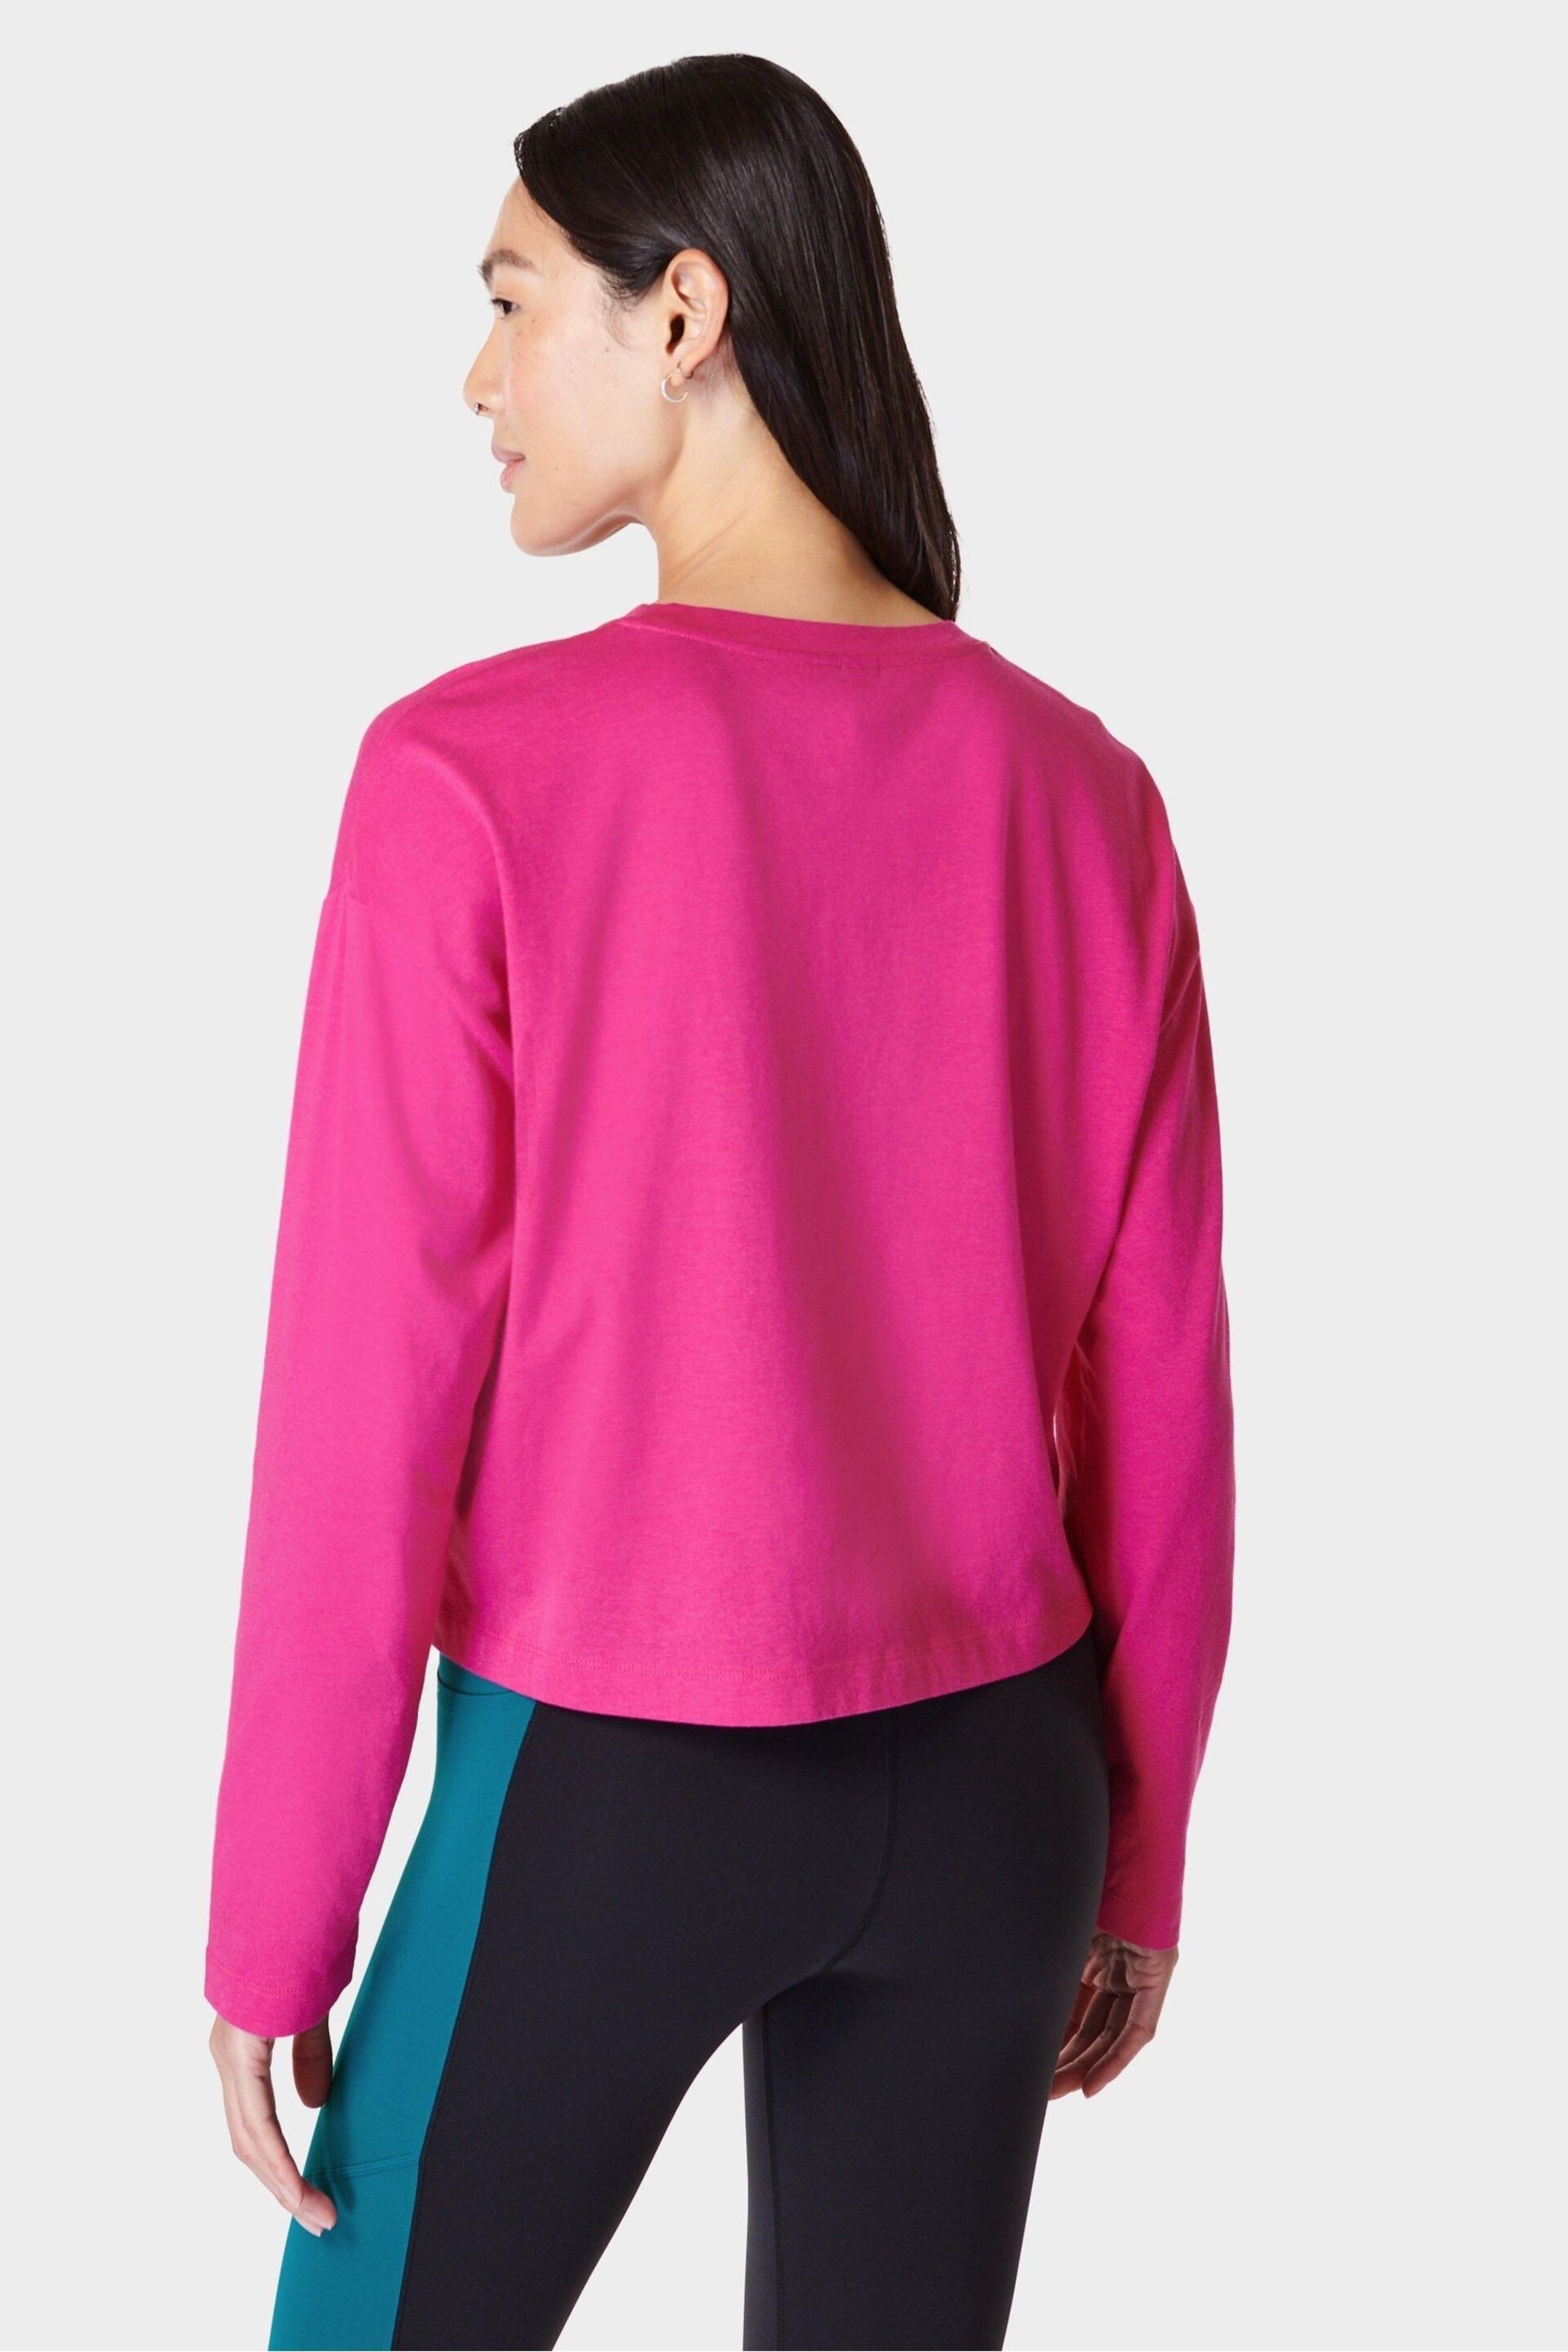 Sweaty Betty Beet Pink Essential Crop Long Sleeve T-Shirt - Image 2 of 7